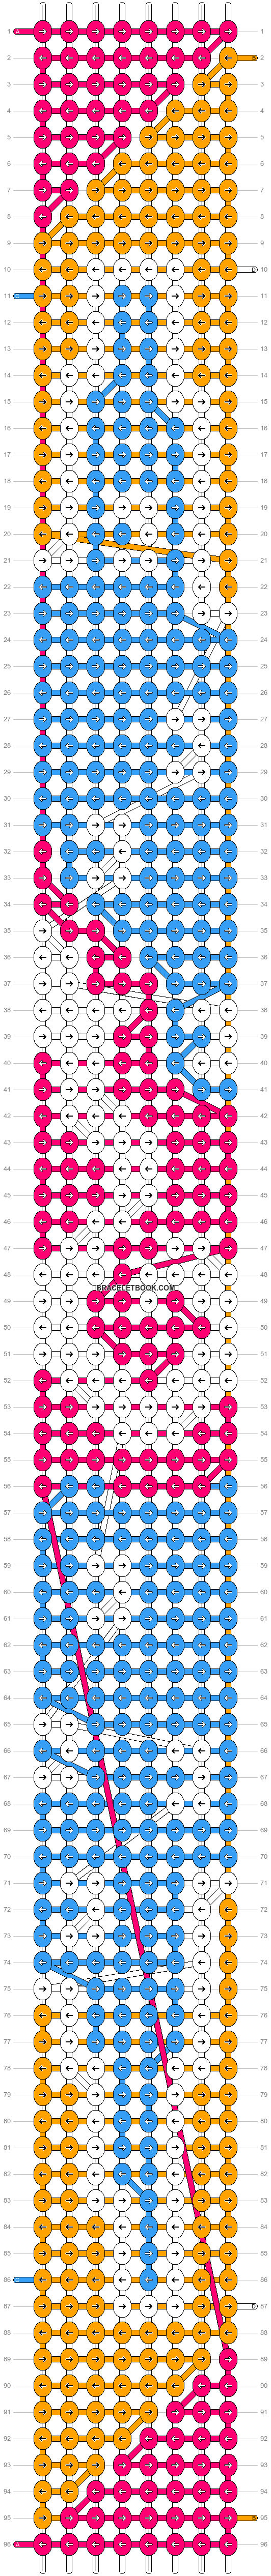 Alpha pattern #35375 variation #36210 pattern